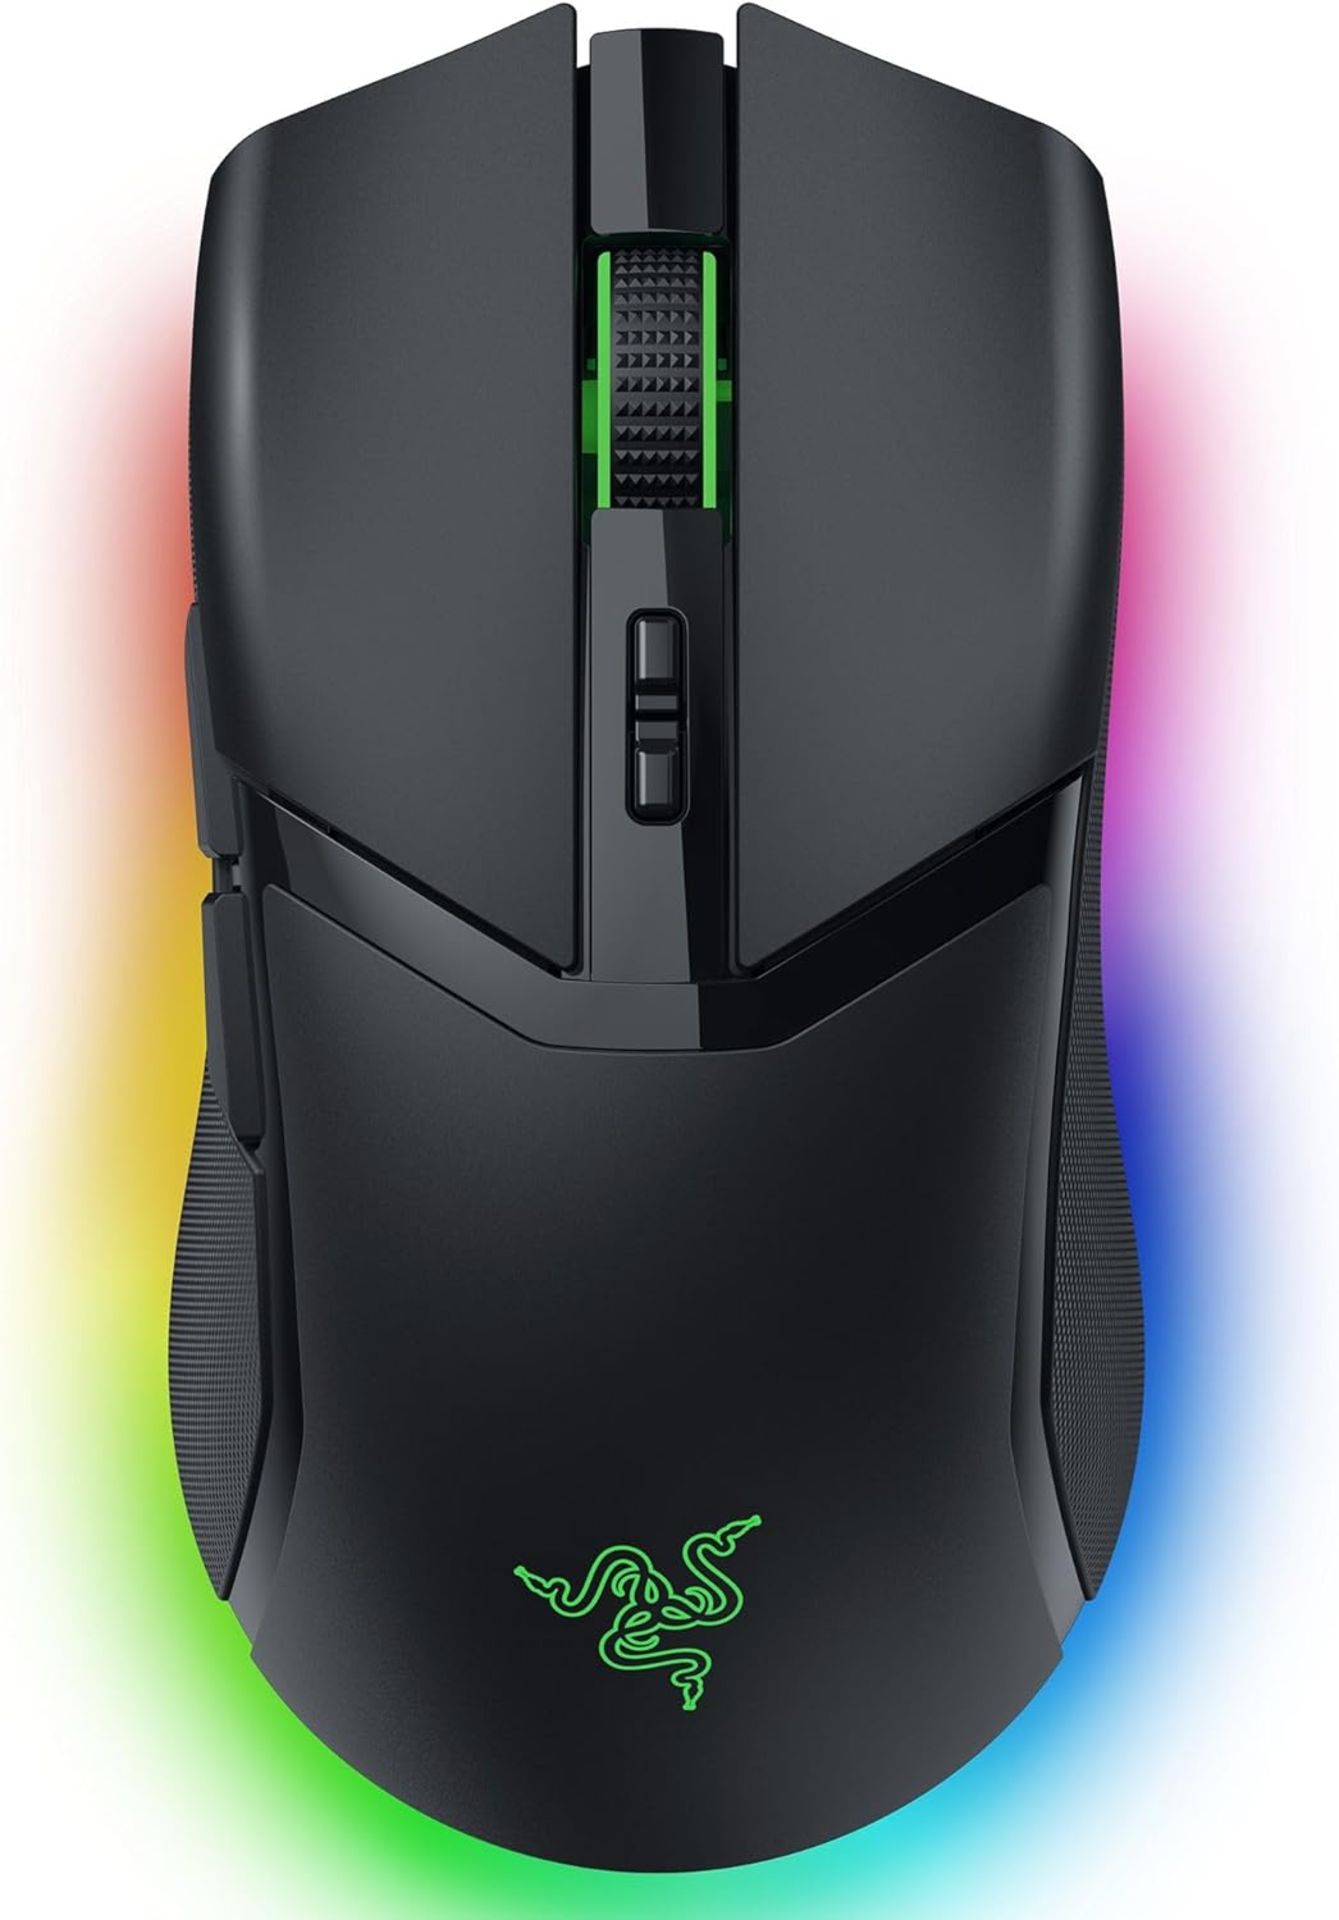 BRAND NEW FACTORY SEALED RAZER Cobra Pro Customizable Wireless Gaming Mouse. RRP £129.99. 10